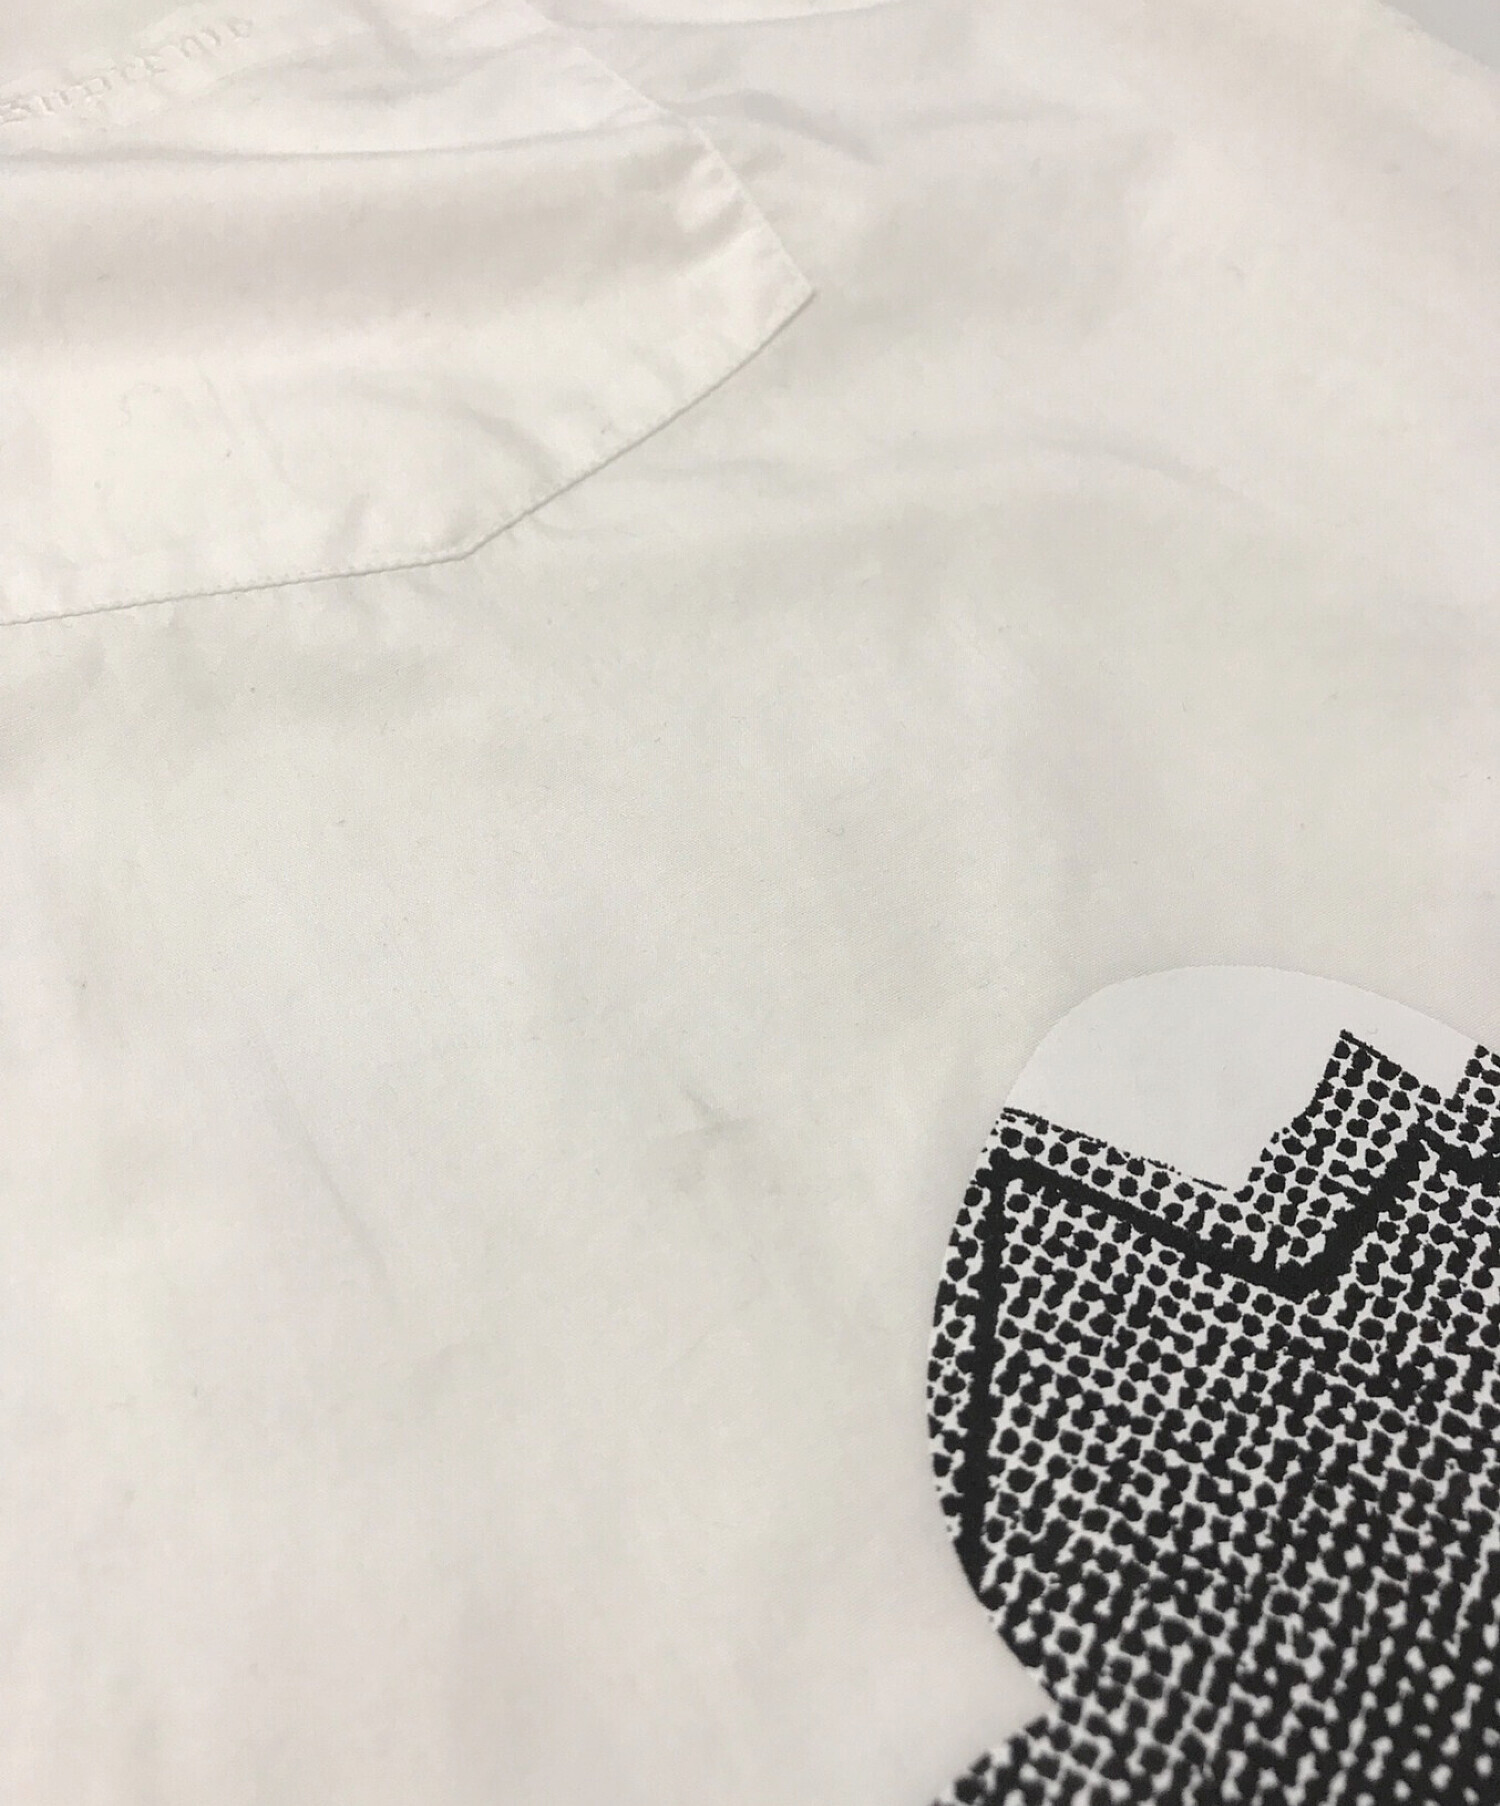 SUPREME (シュプリーム) 22SS Nate Lowman S/S Shirt ネイトローマン 半袖シャツ ホワイト サイズ:XL